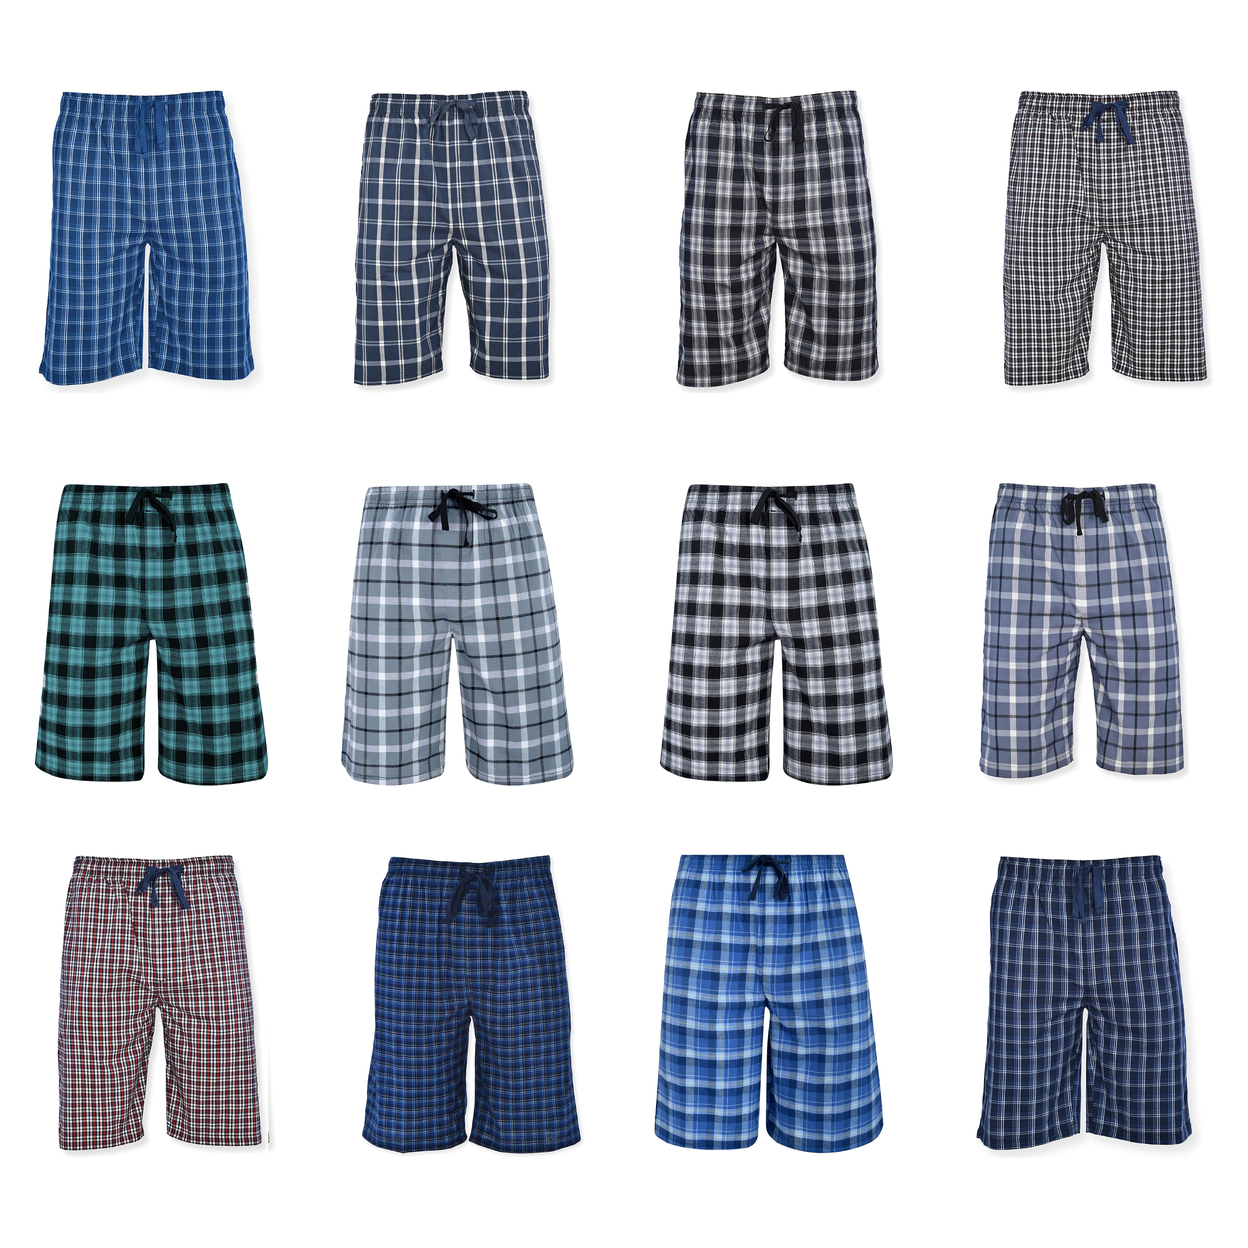 5-Pack: Men's Ultra Soft Plaid Lounge Pajama Sleep Wear Shorts - Large